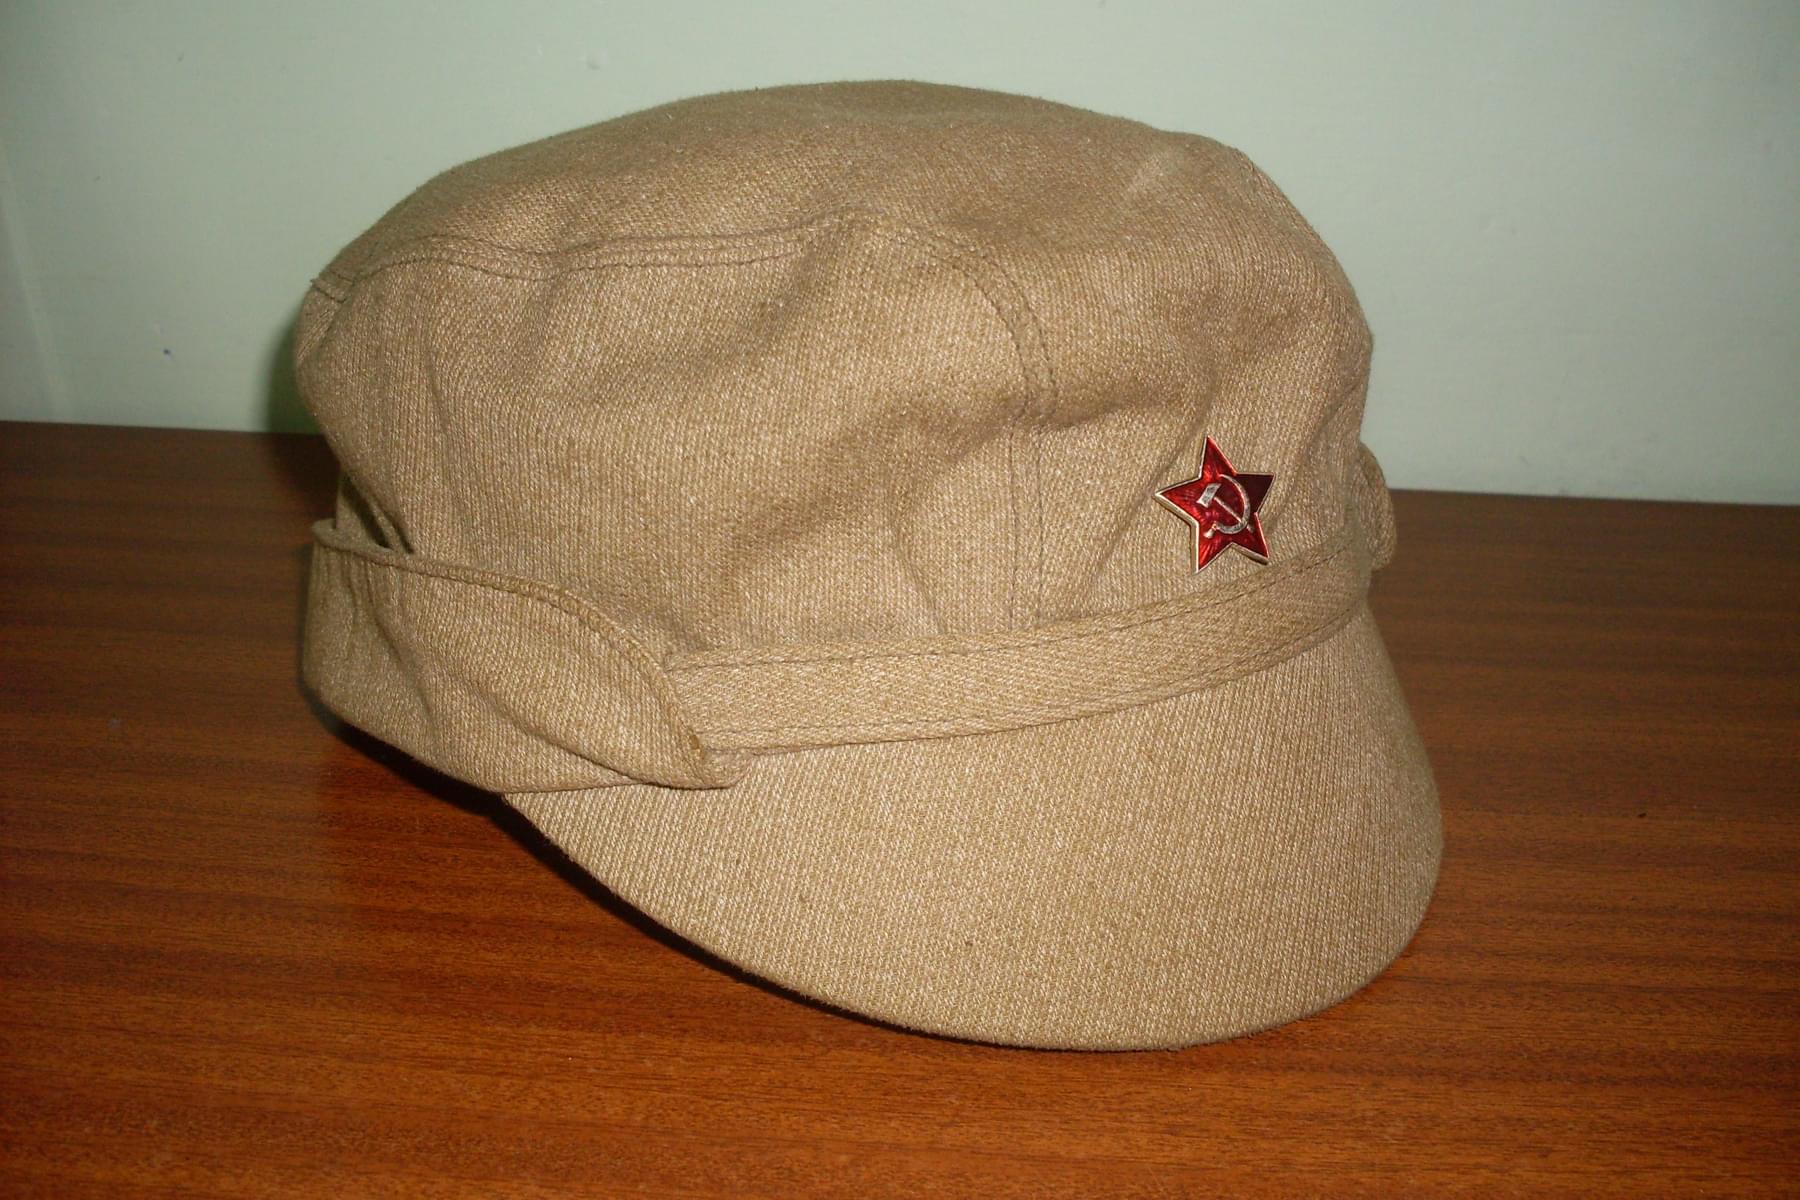 Wear a Hat or a Cap